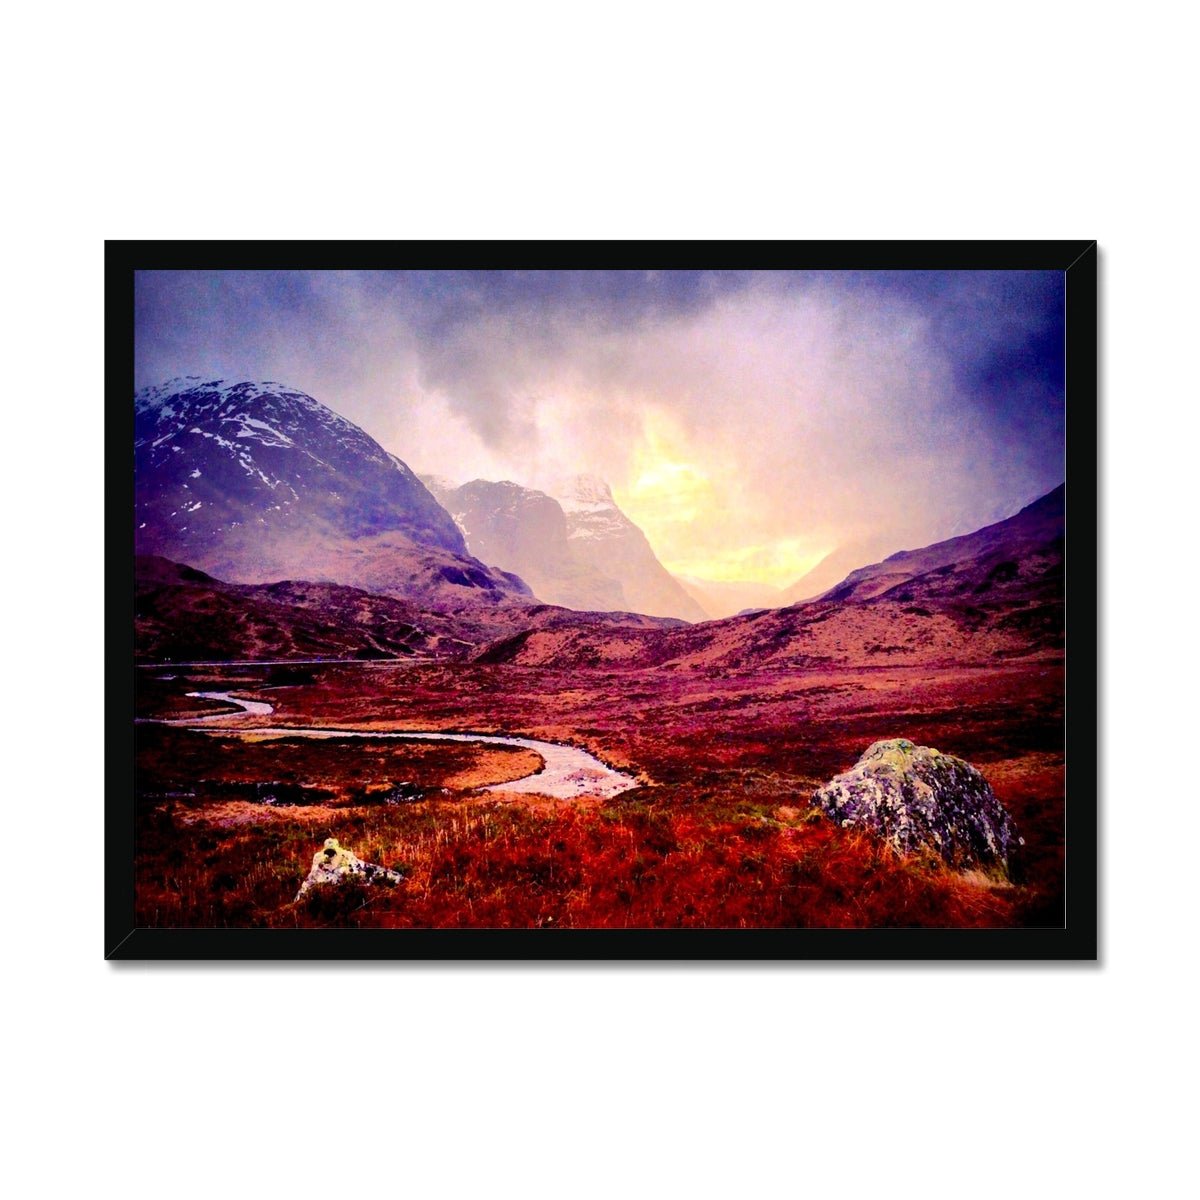 A Brooding Glencoe Painting | Framed Prints From Scotland-Framed Prints-Glencoe Art Gallery-A2 Landscape-Black Frame-Paintings, Prints, Homeware, Art Gifts From Scotland By Scottish Artist Kevin Hunter